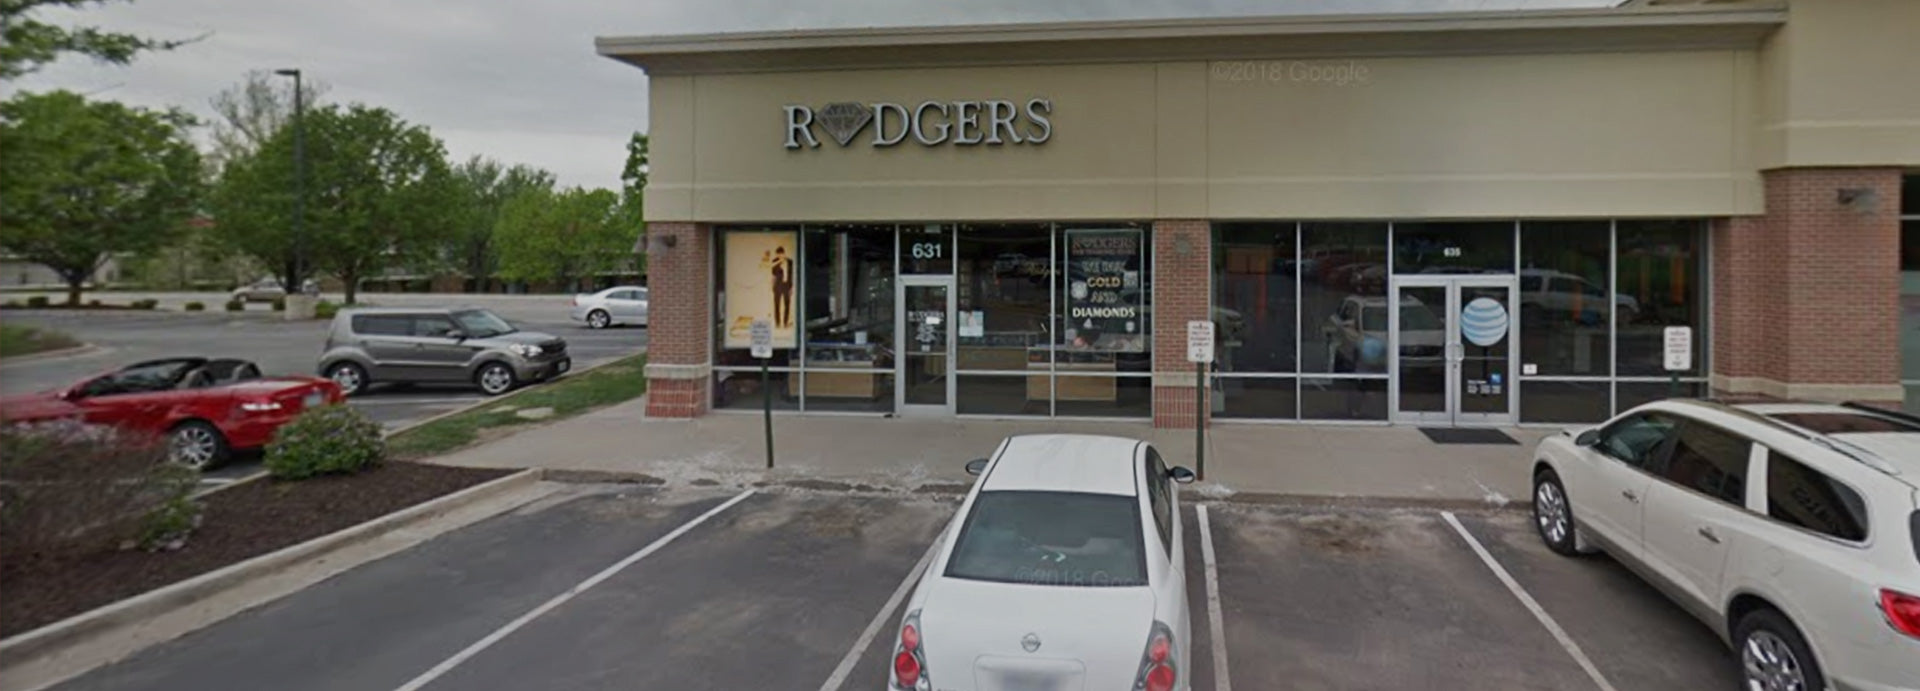 Rodgers The Diamond Store